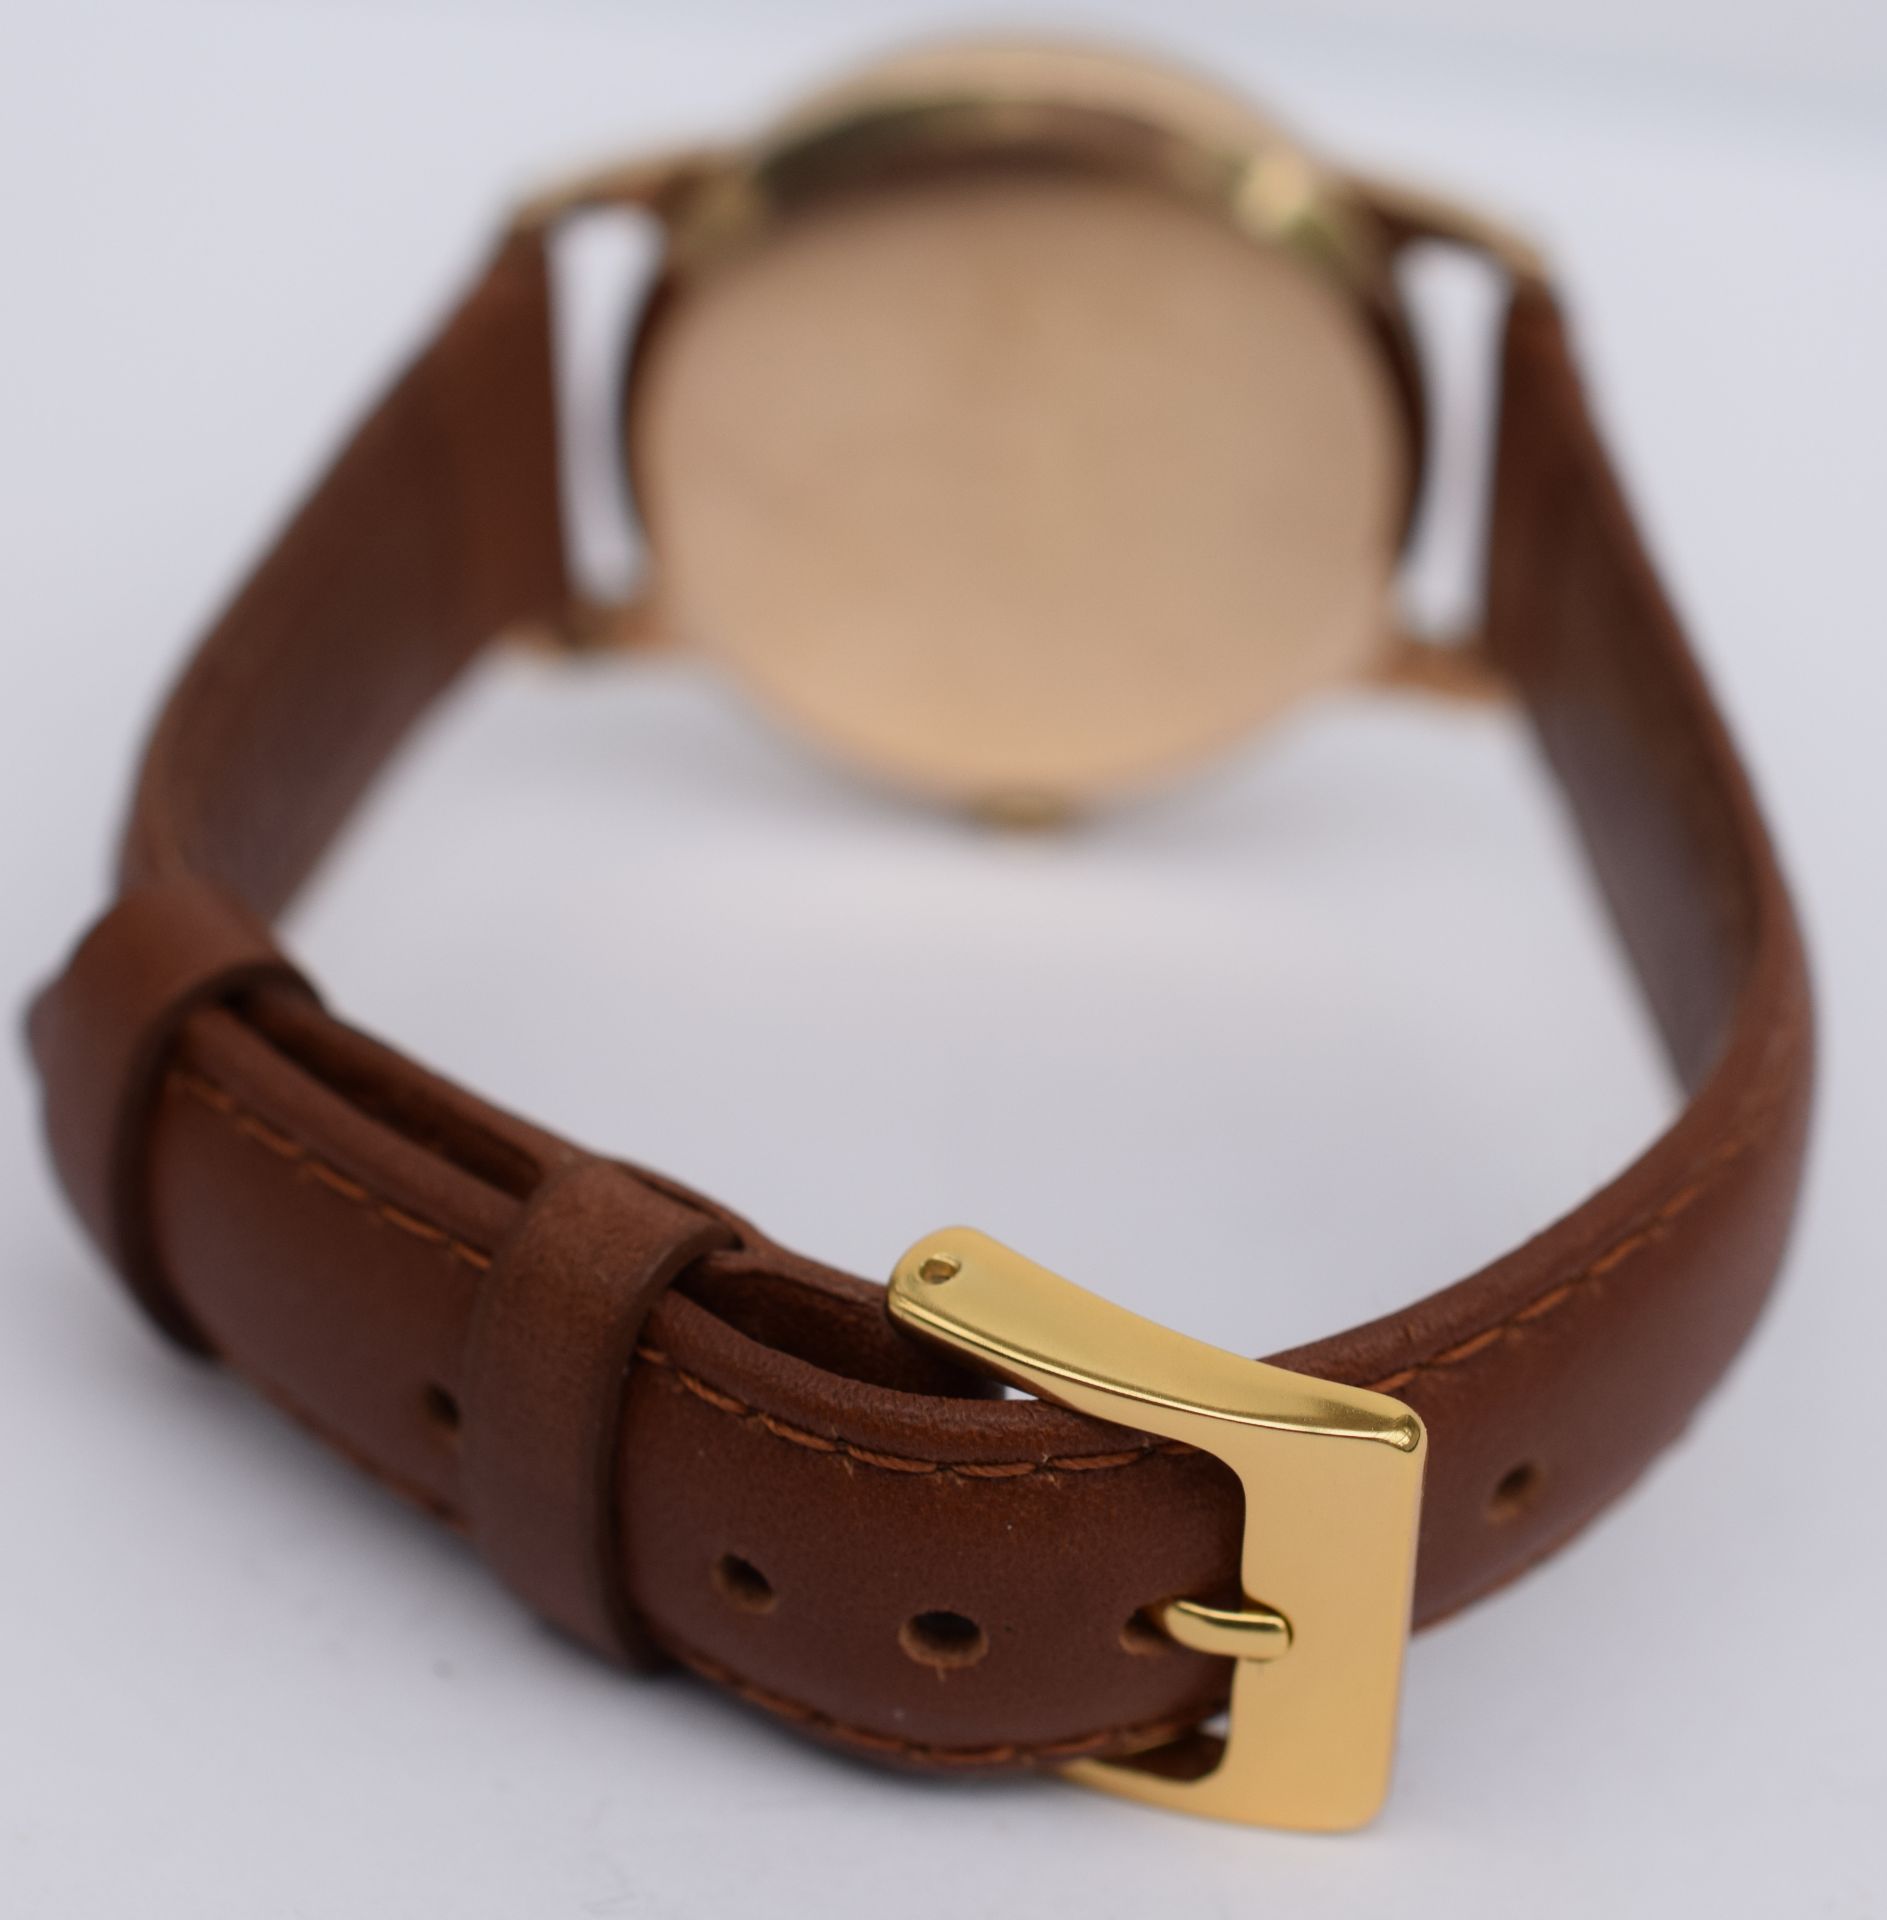 9ct Gold Garrard Gentleman's Manual Wind Wristwatch - Image 4 of 9